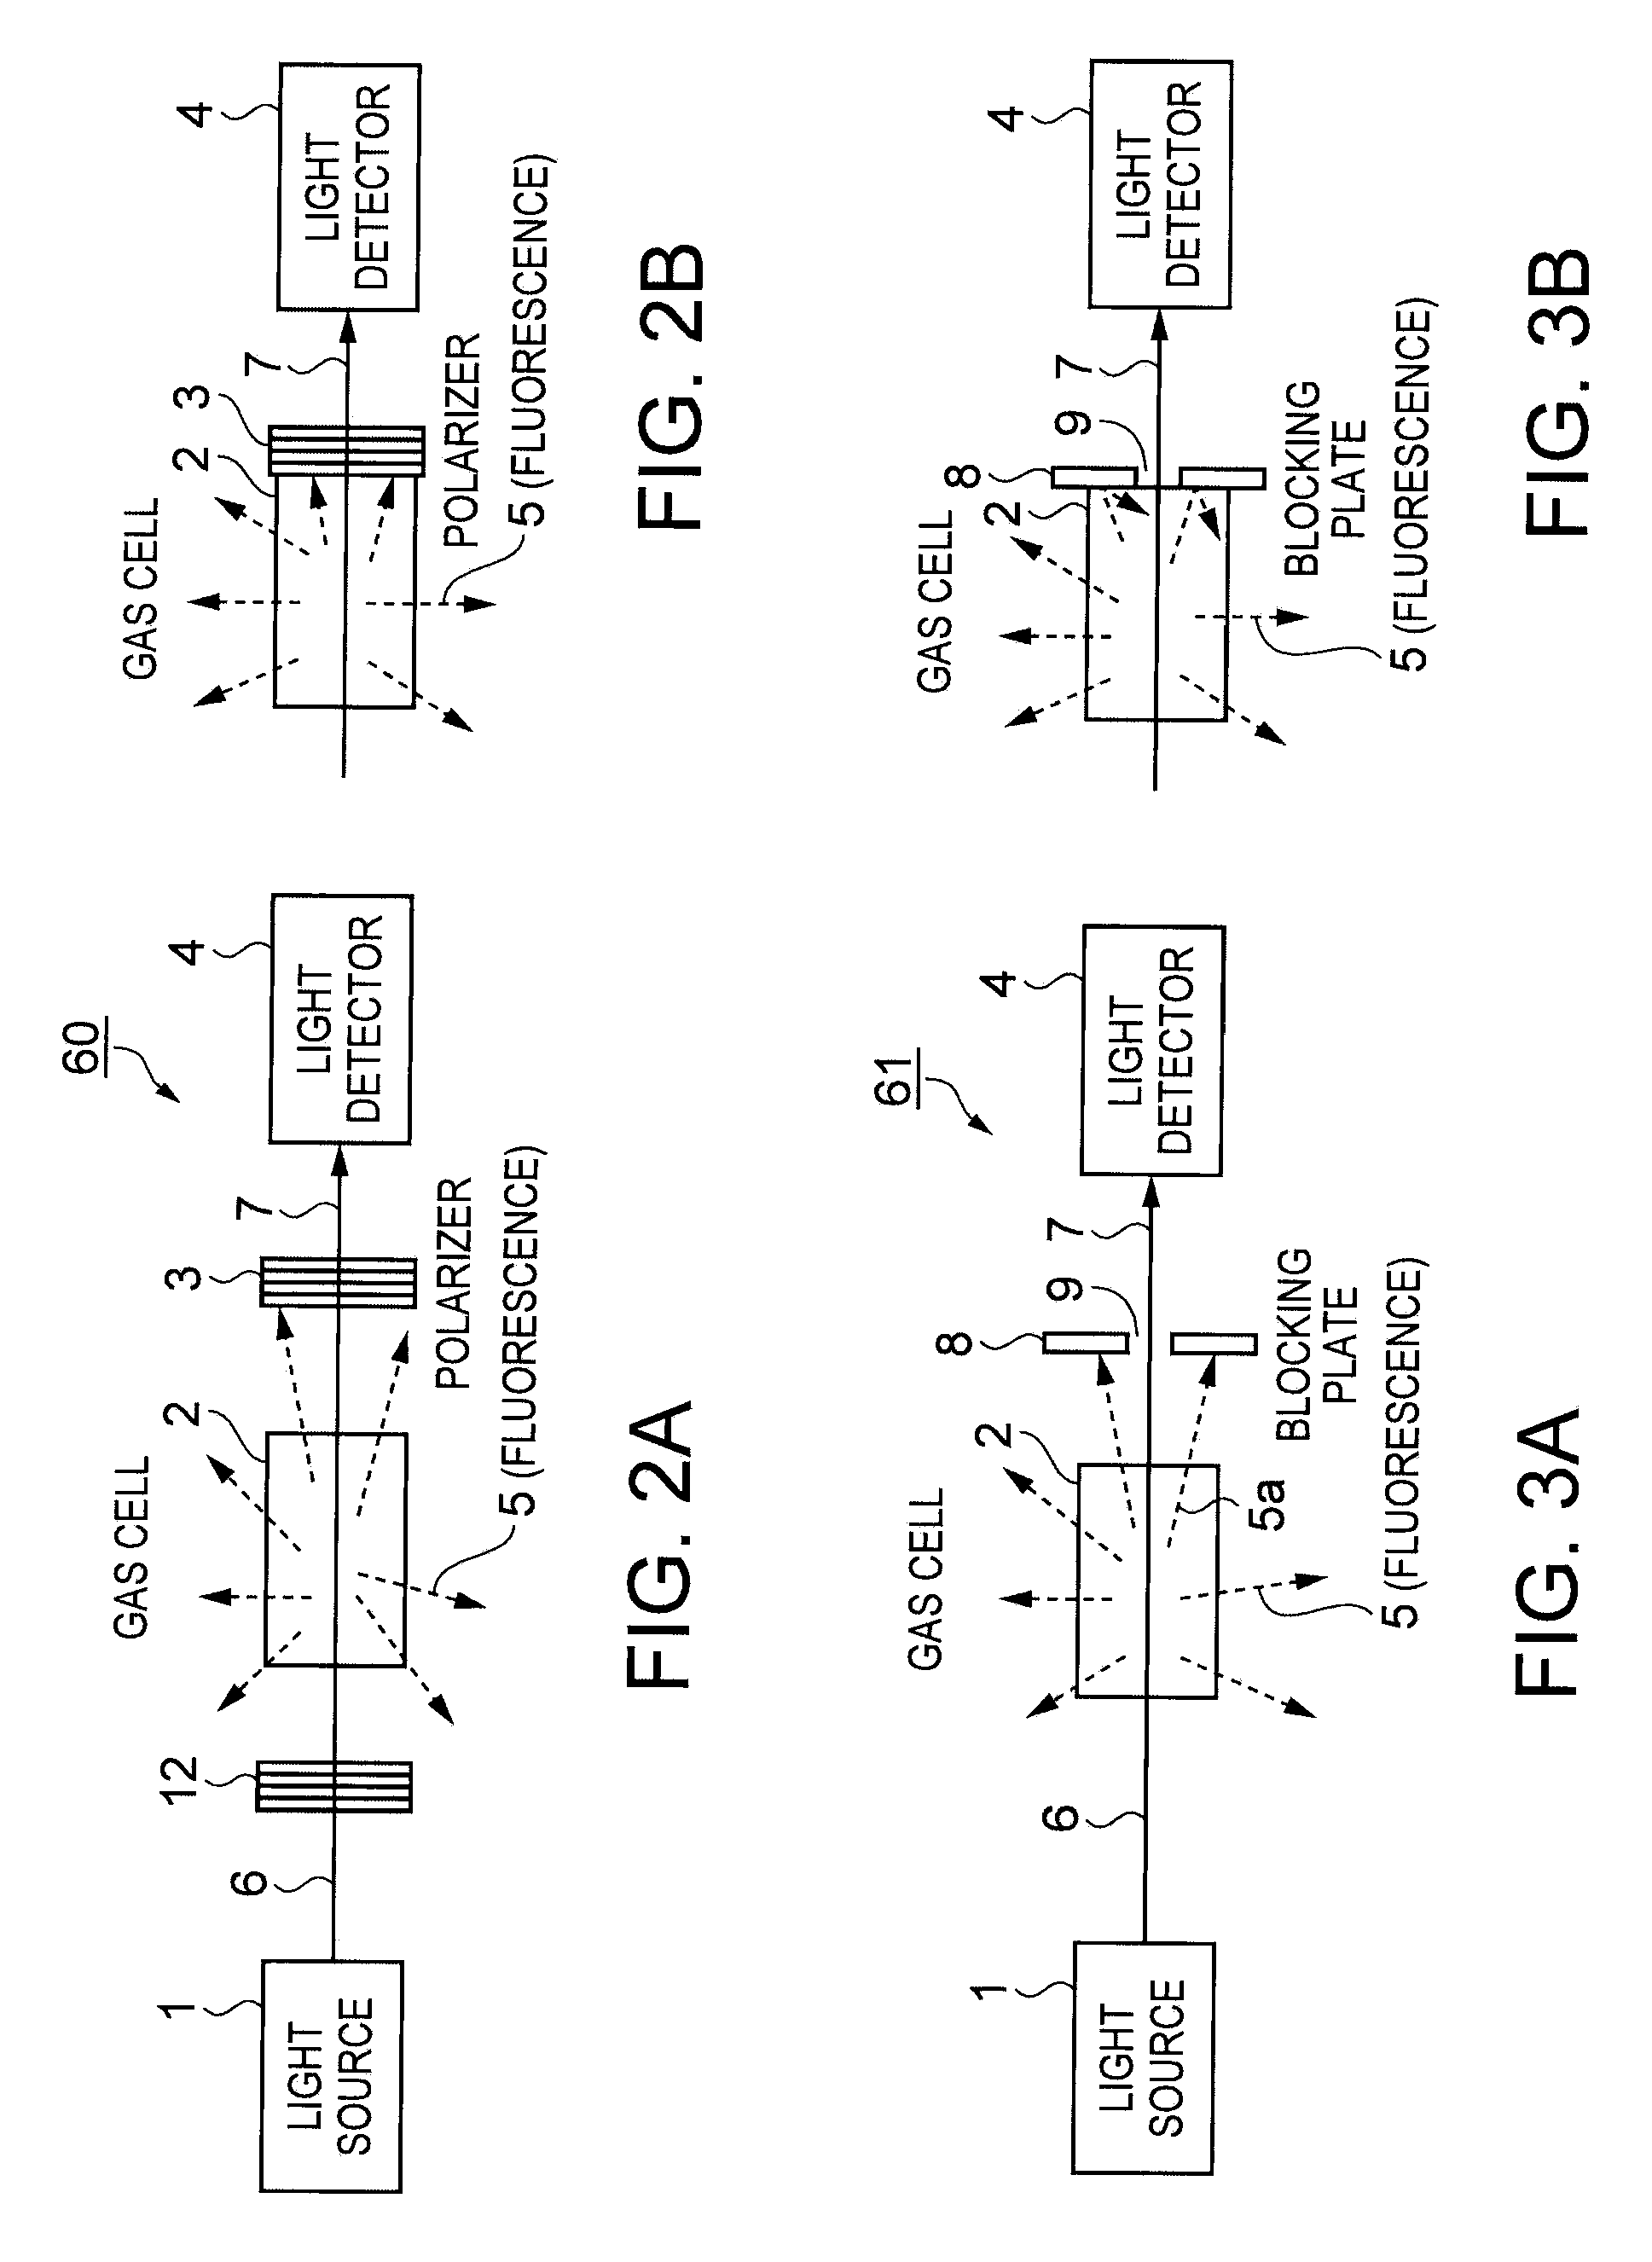 Optical system of atomic oscillator and atomic oscillator